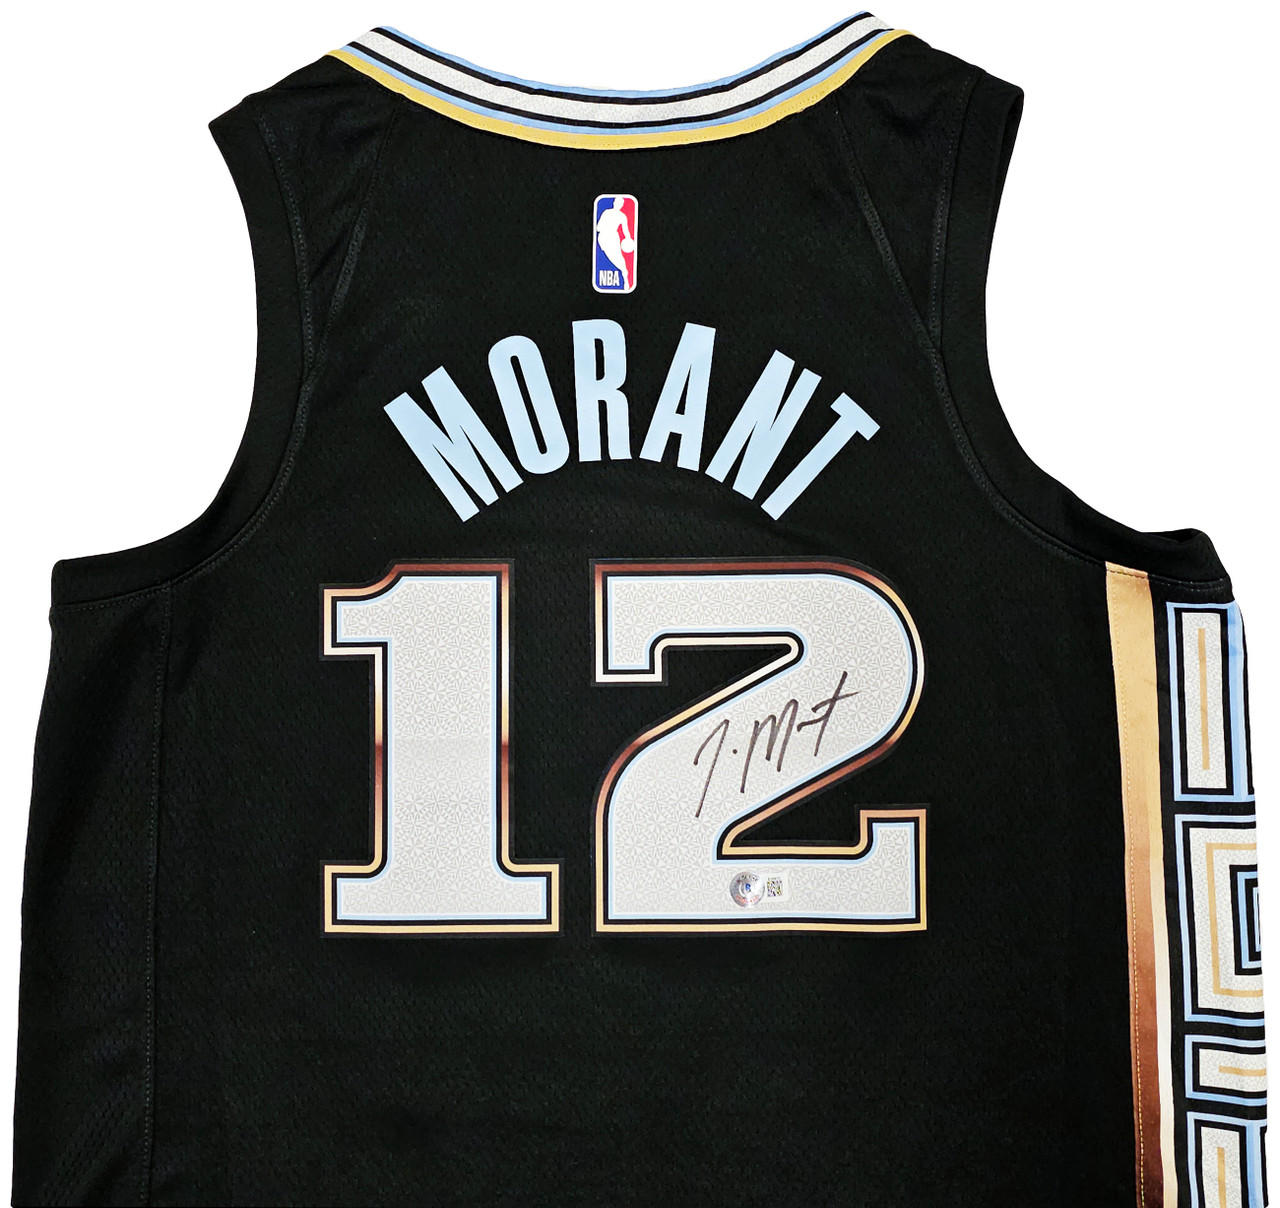 SOLD OUT! Authentic Nike Ja Morant Memphis Grizzlies City Edition